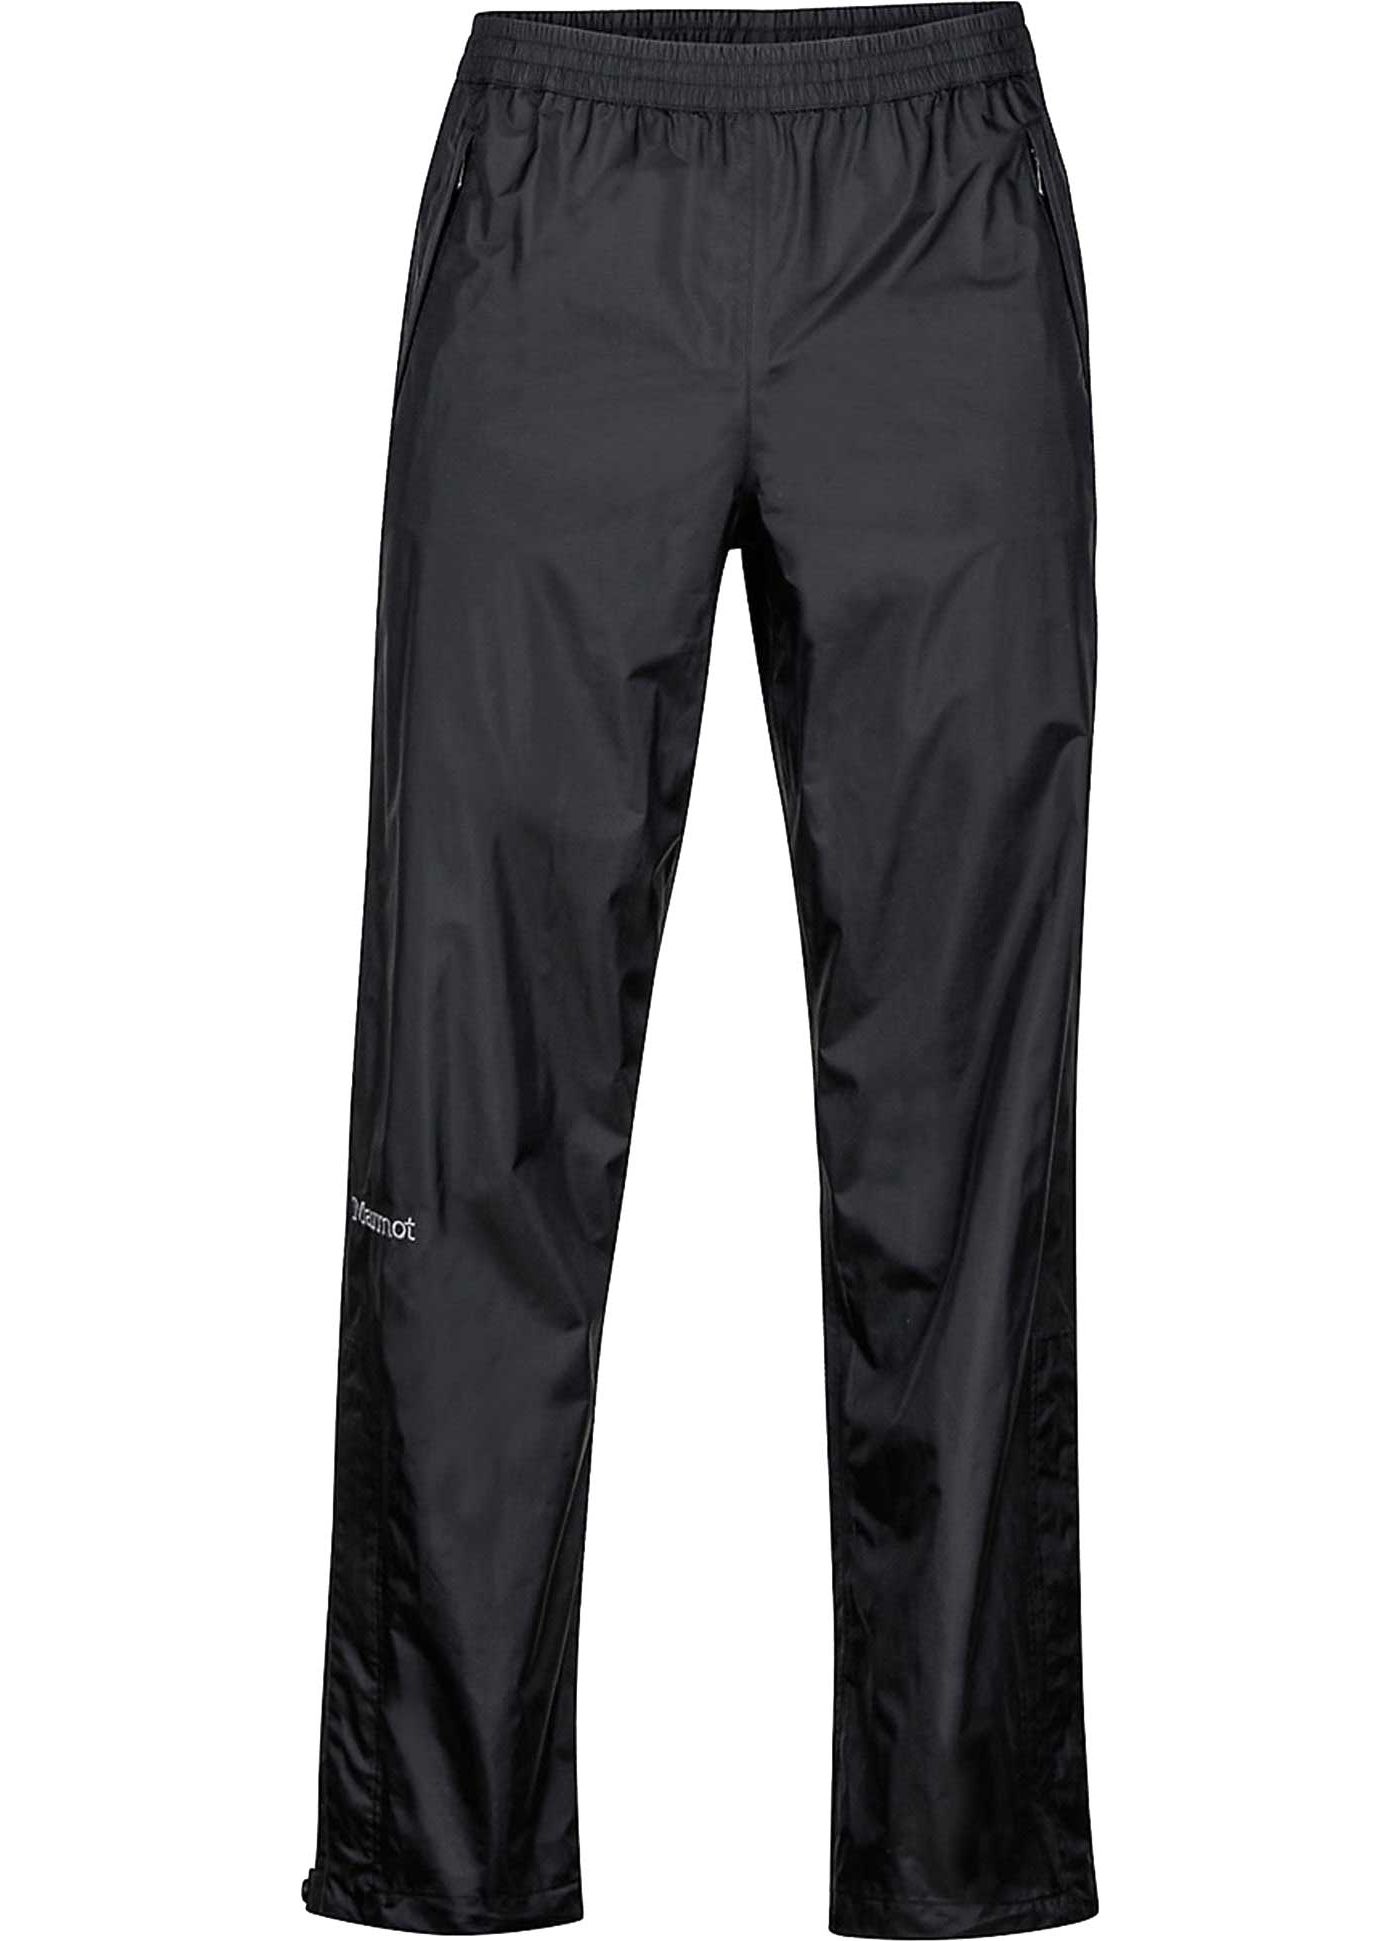 Marmot Men's PreCip Rain Pants | DICK'S Sporting Goods